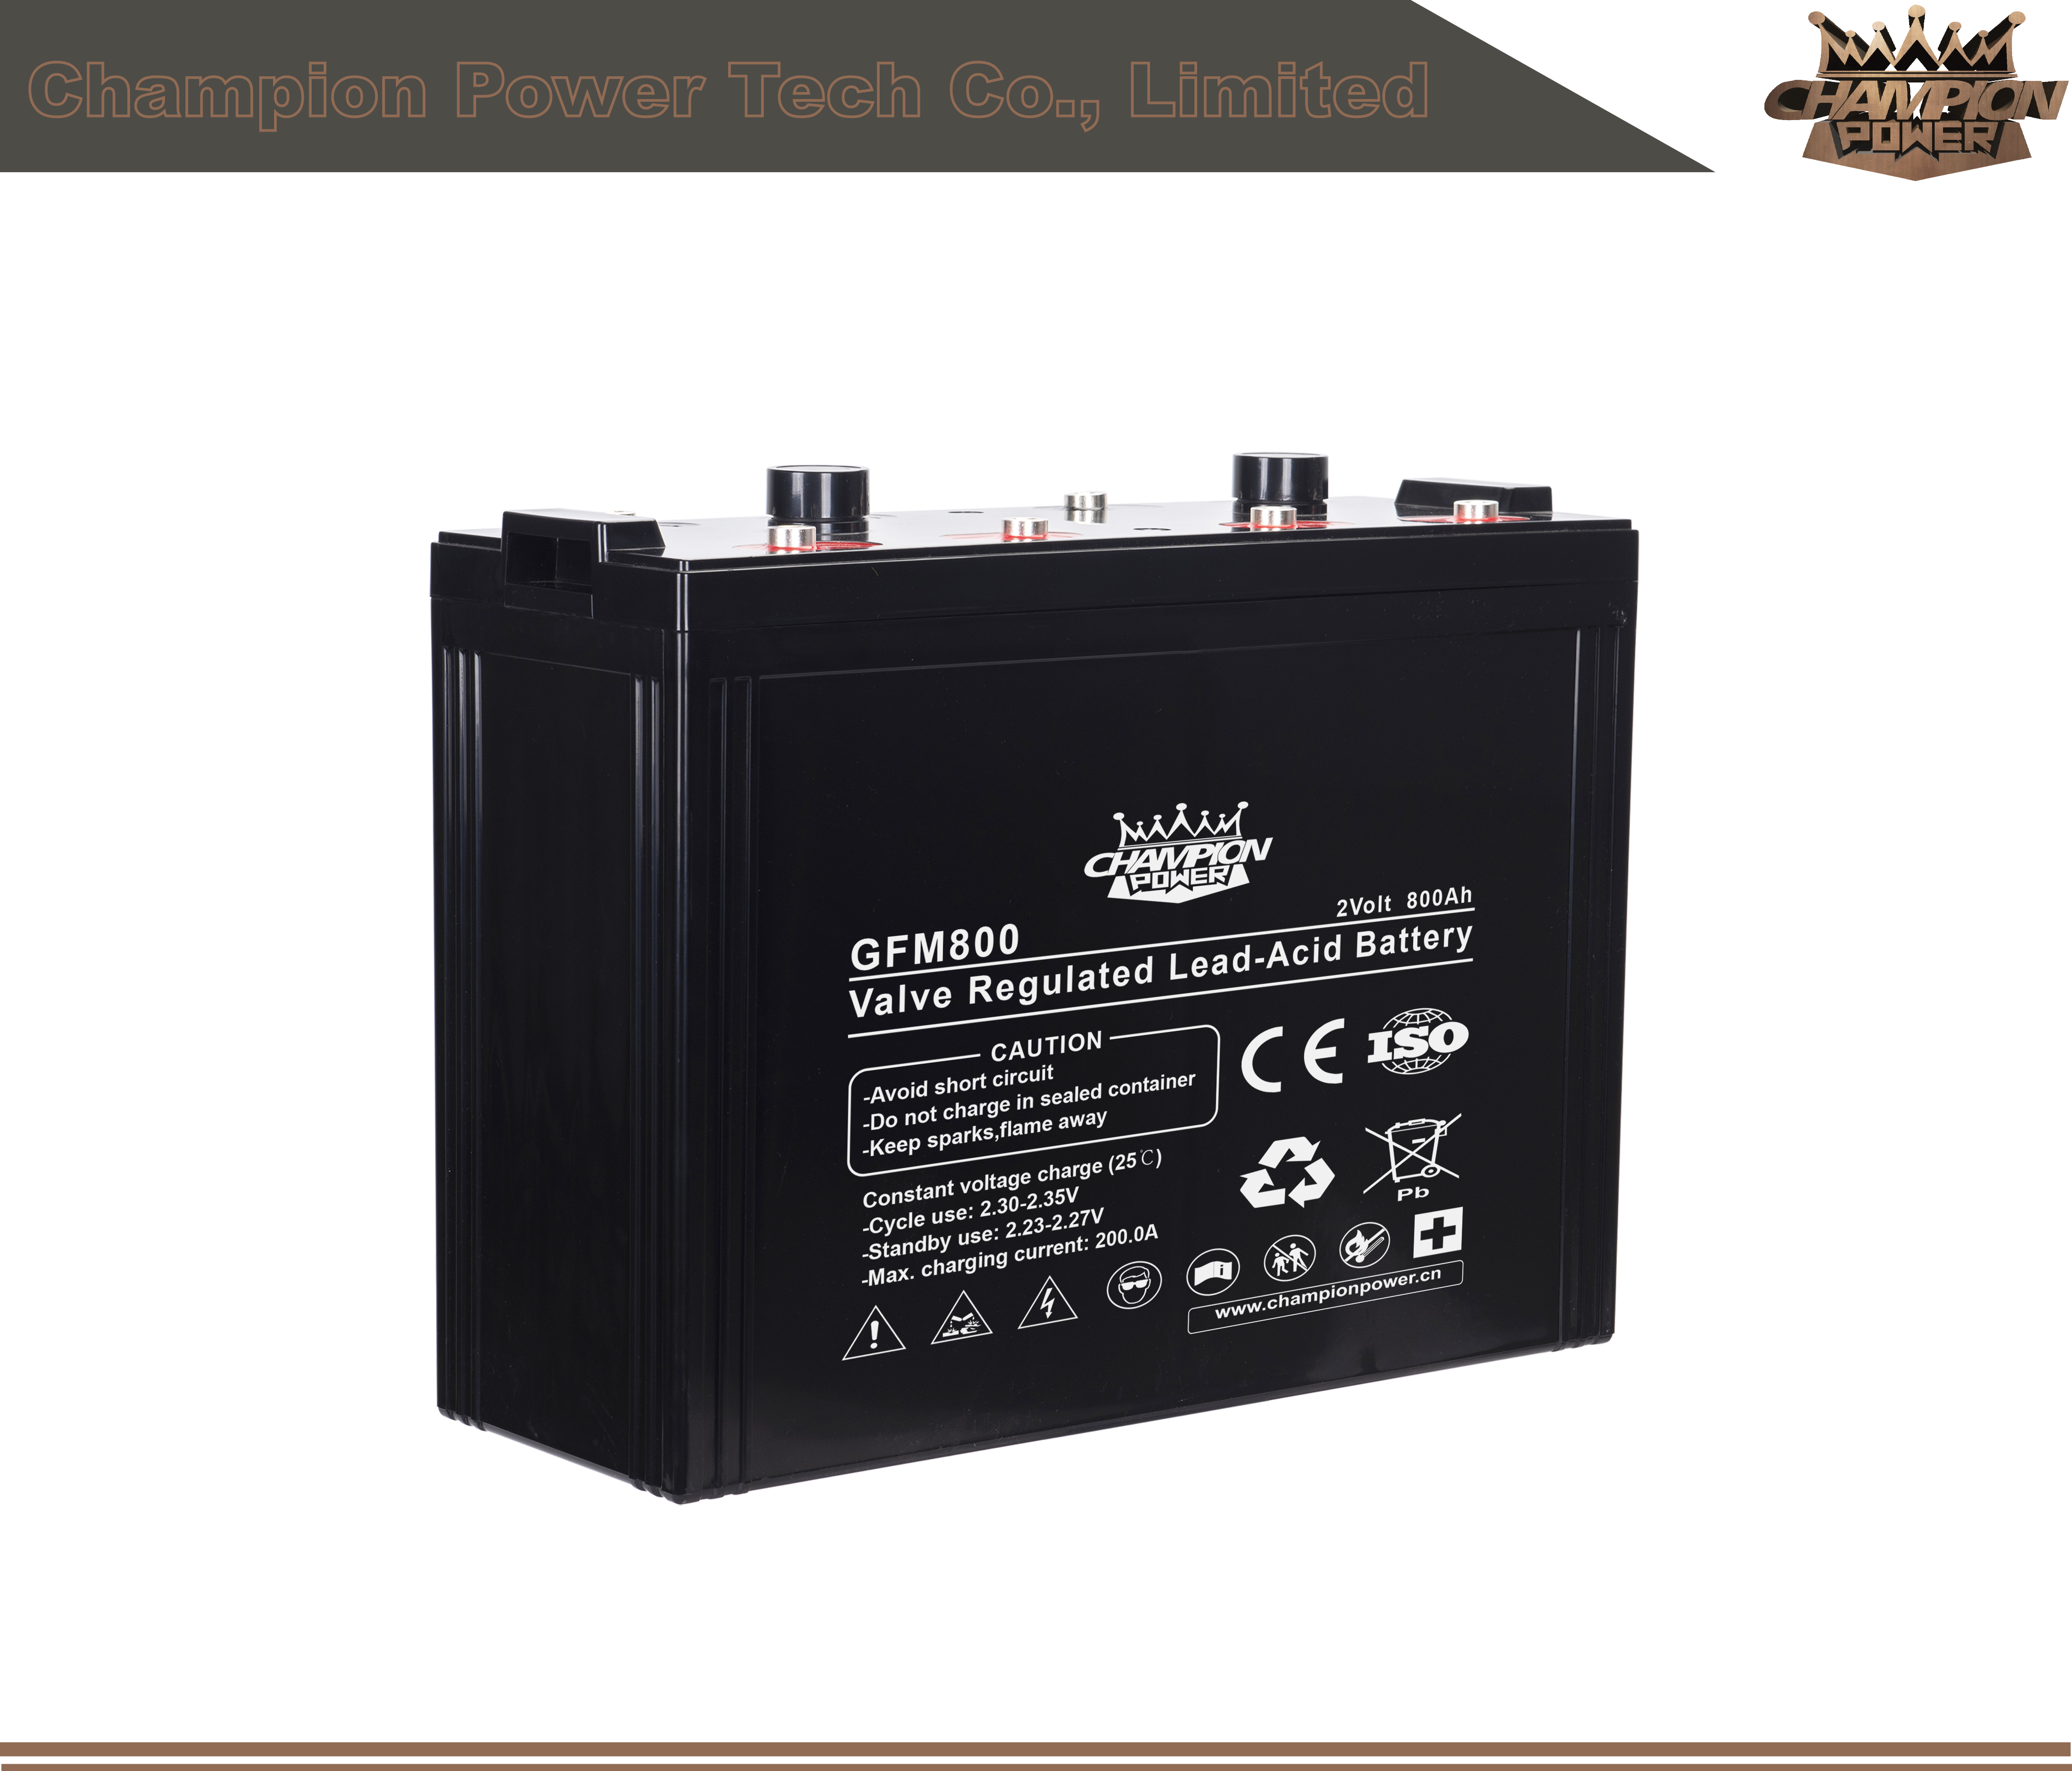 GFM800 2V800Ah Lead Acid Battery